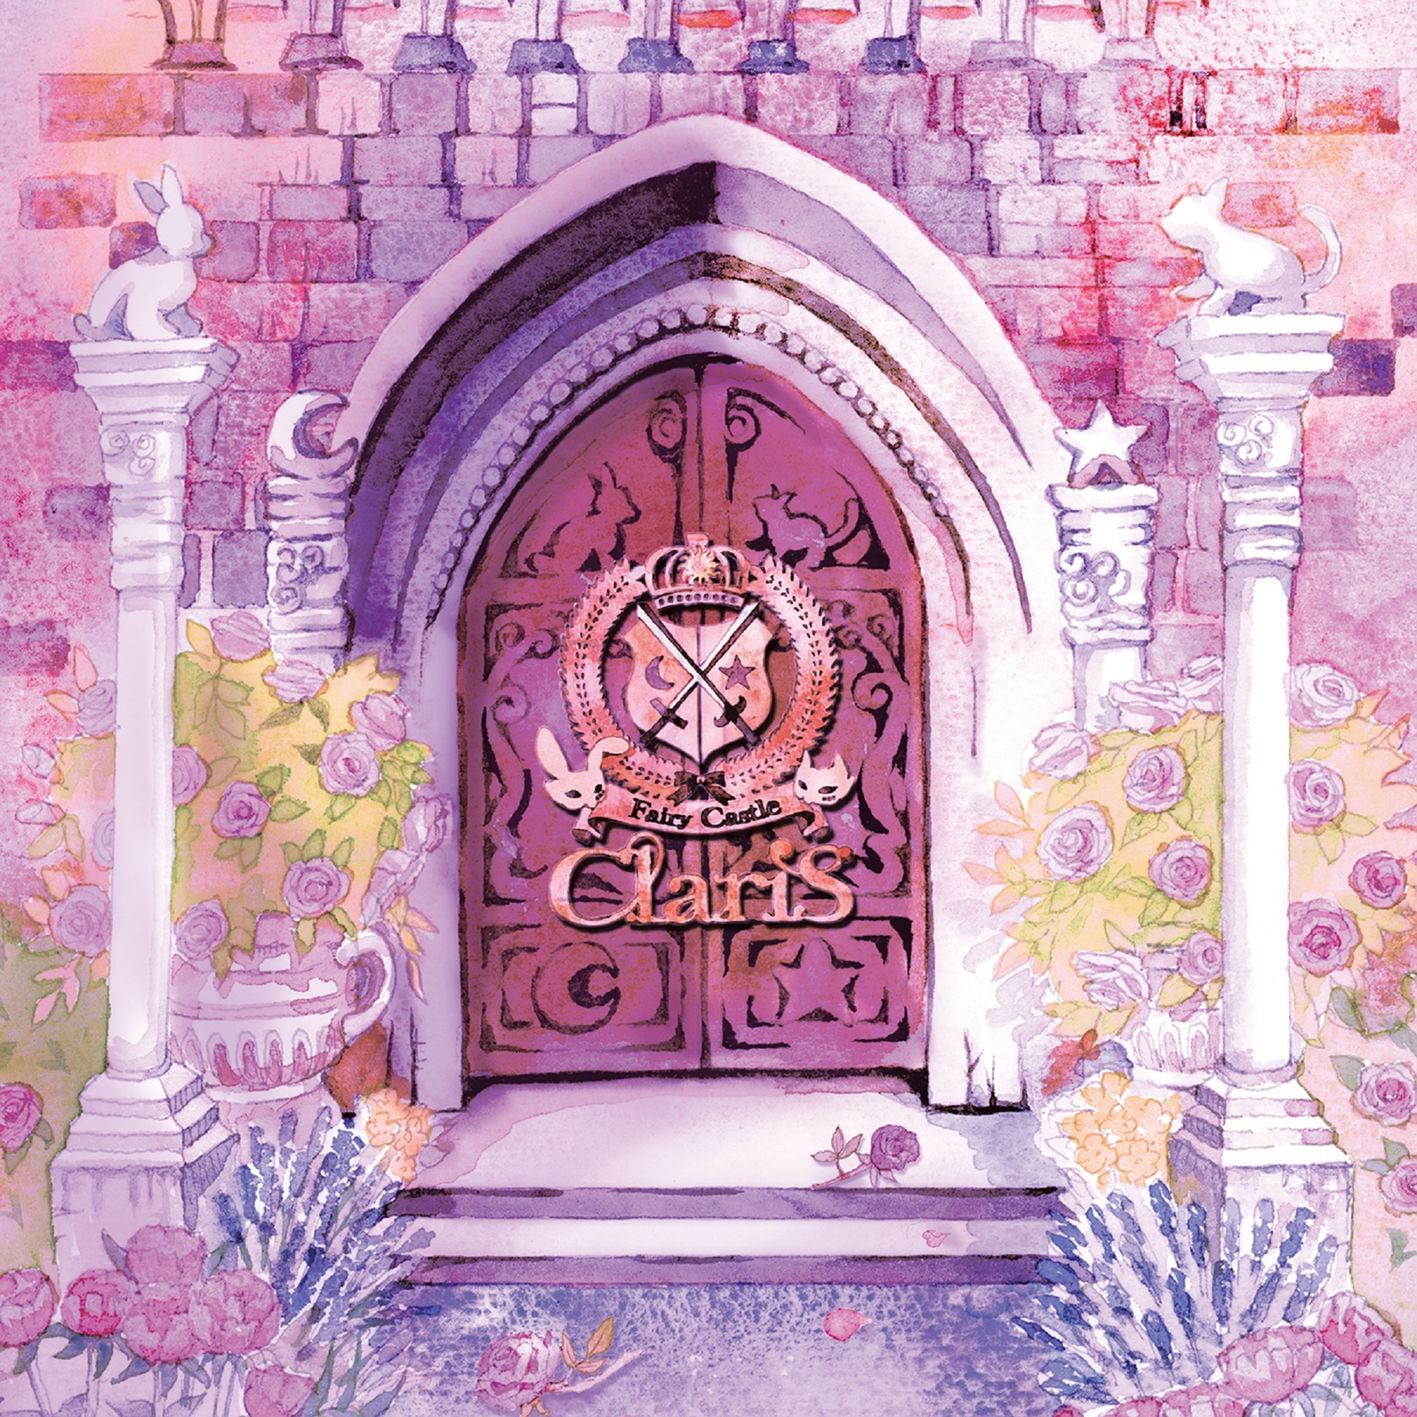 20170225.01.05 ClariS - Fairy Castle (Limited edition) cover 1.jpg